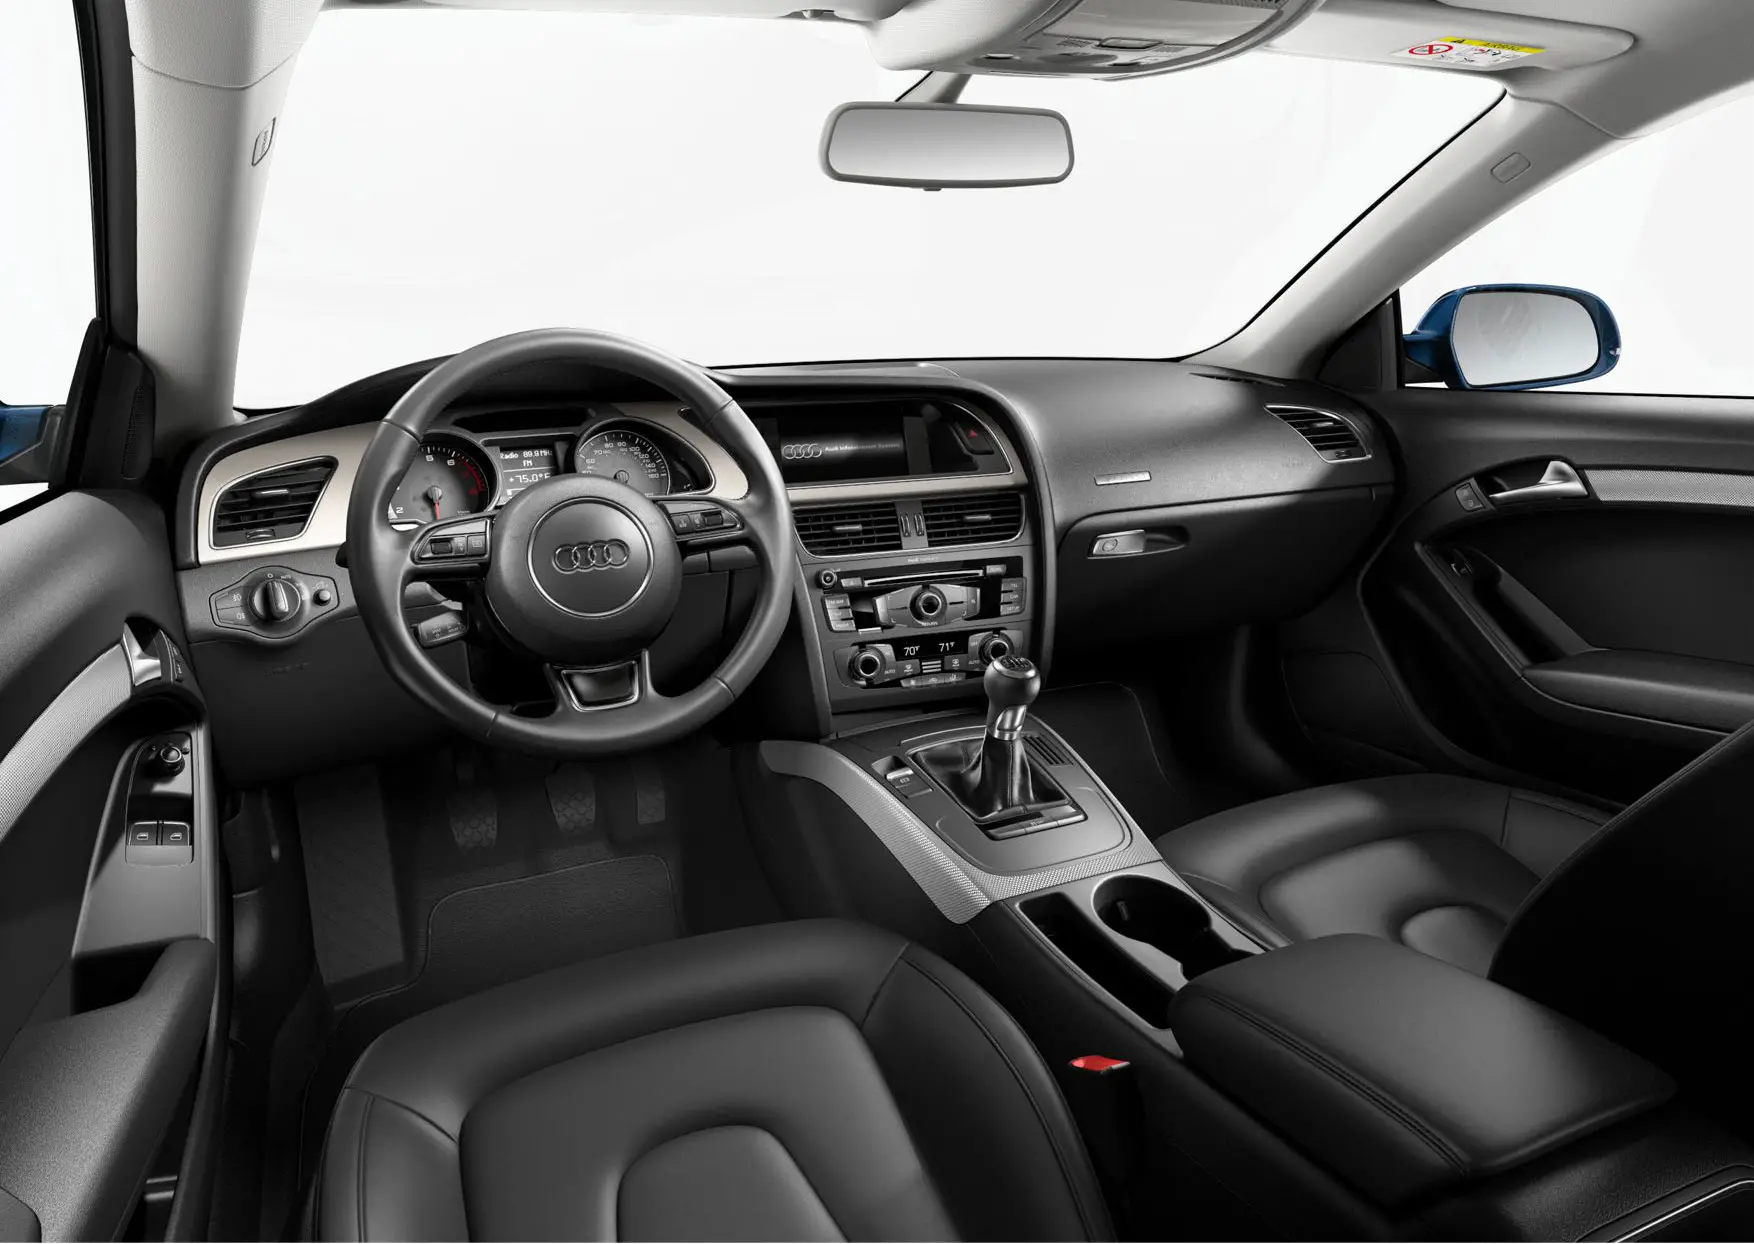 Audi A5 Premium Coupe interior front seat view